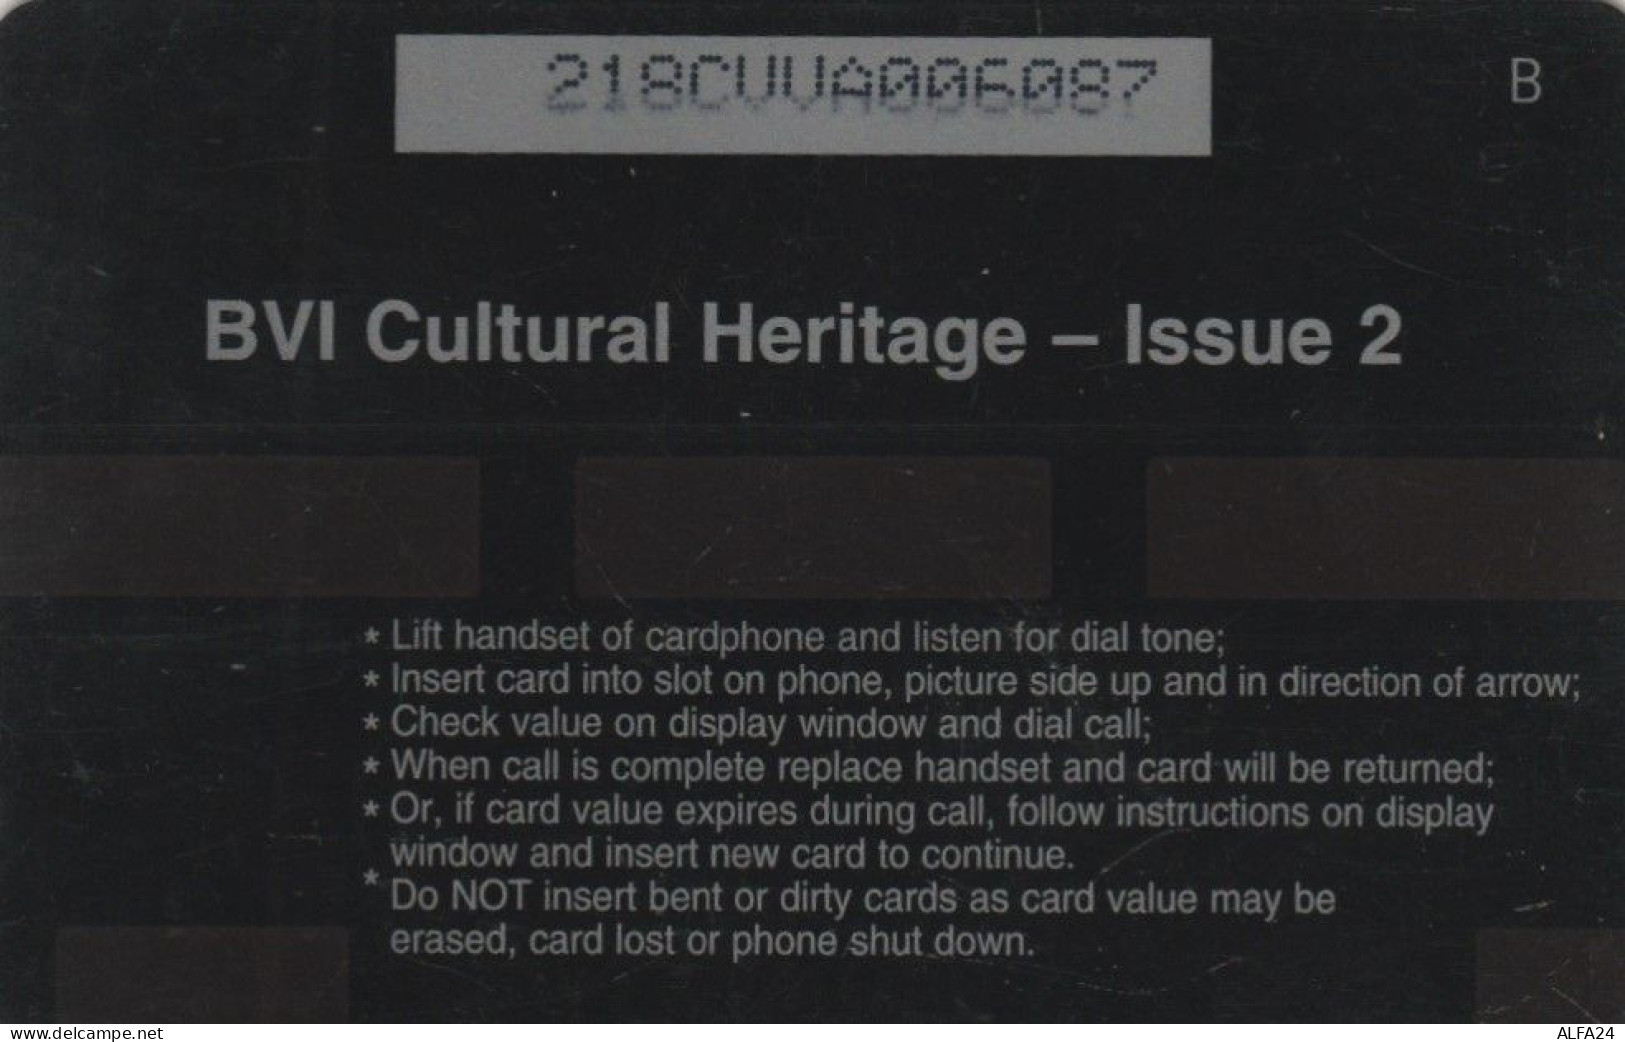 PHONE CARD BRITISH VIRGIN ISLAND  (E98.9.8 - Virgin Islands